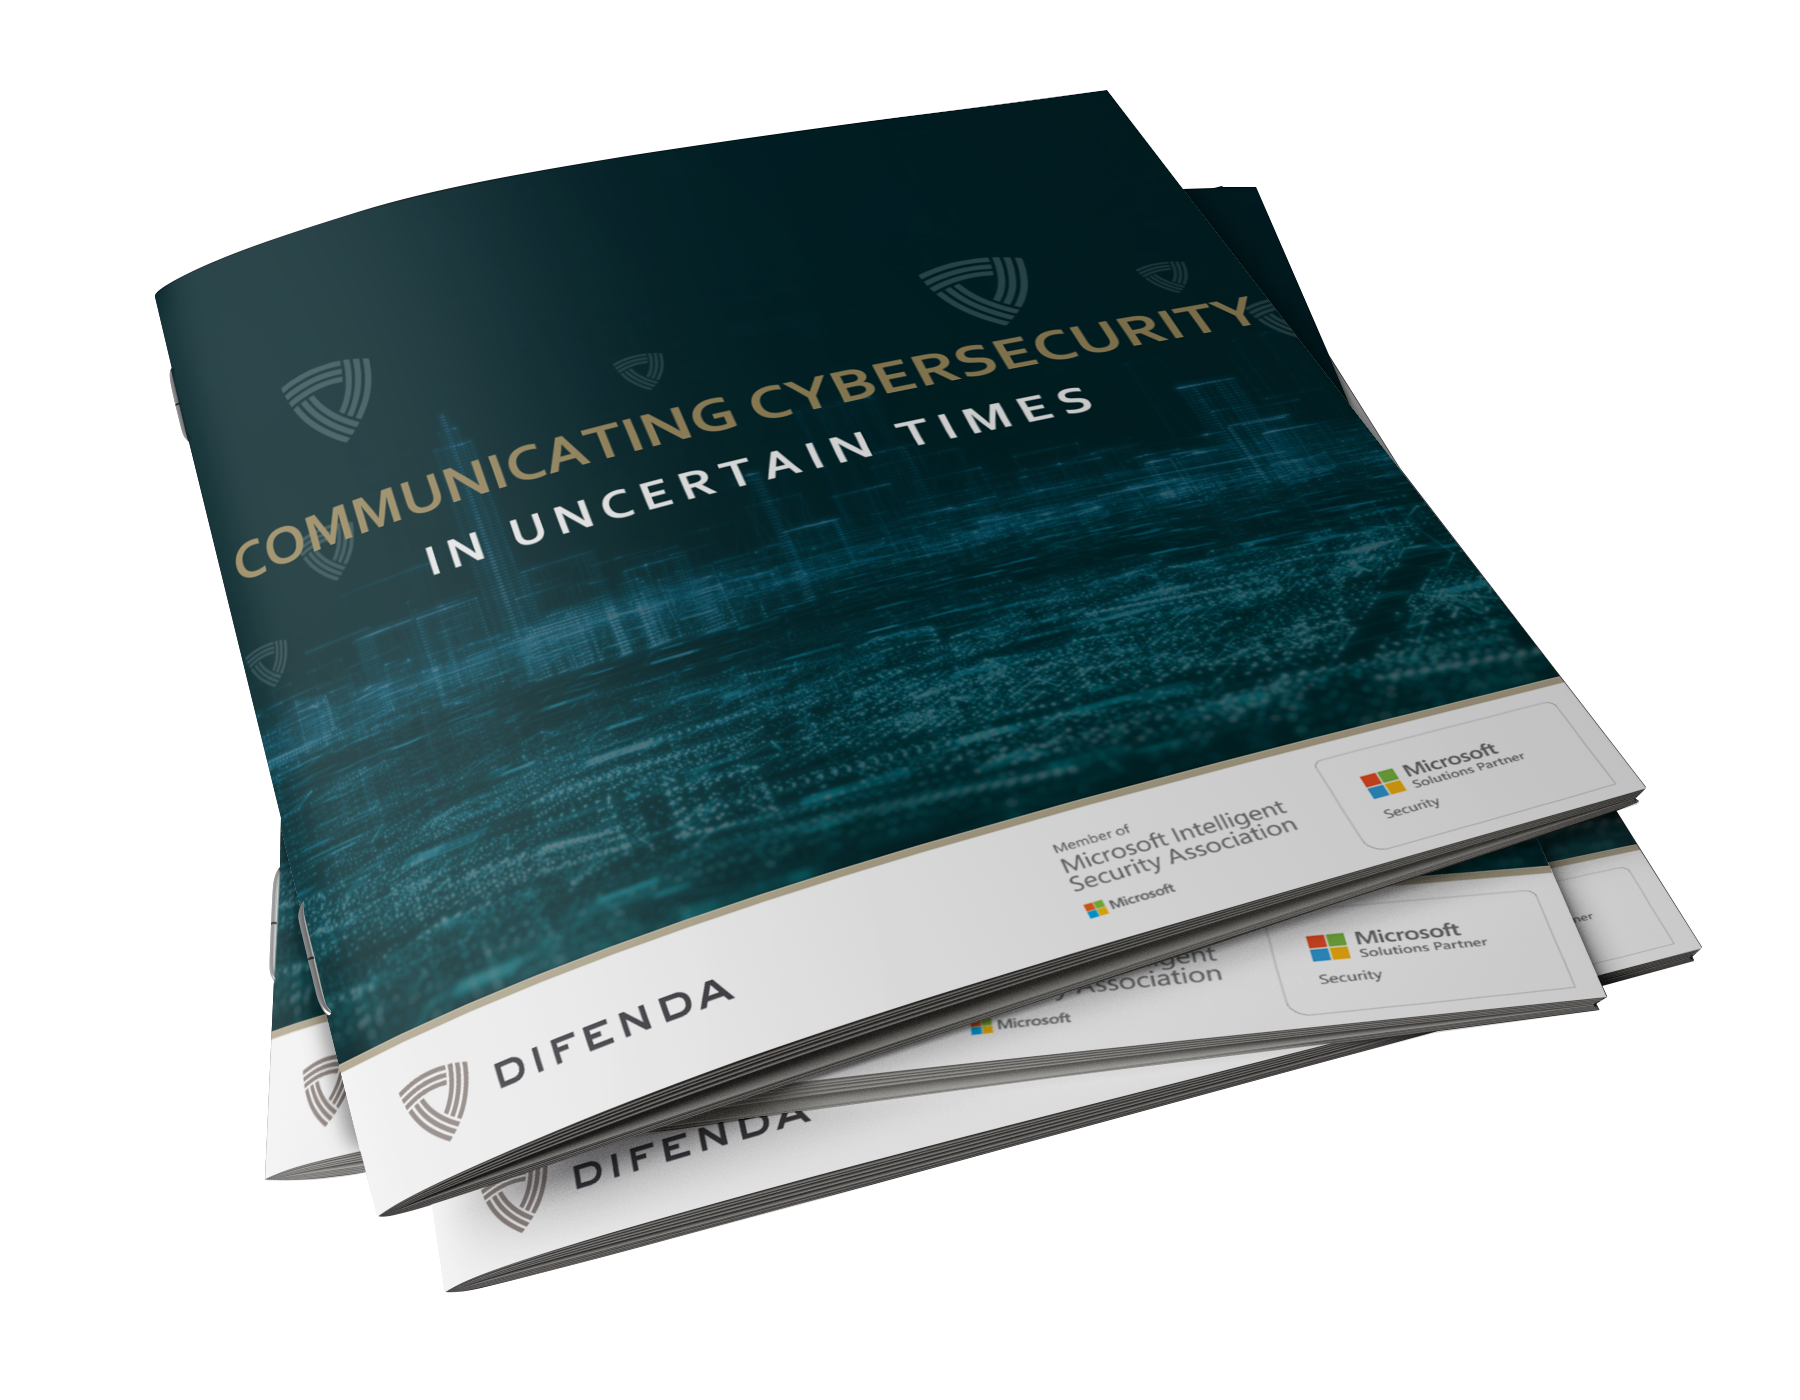 communicating cybersecurity ebook